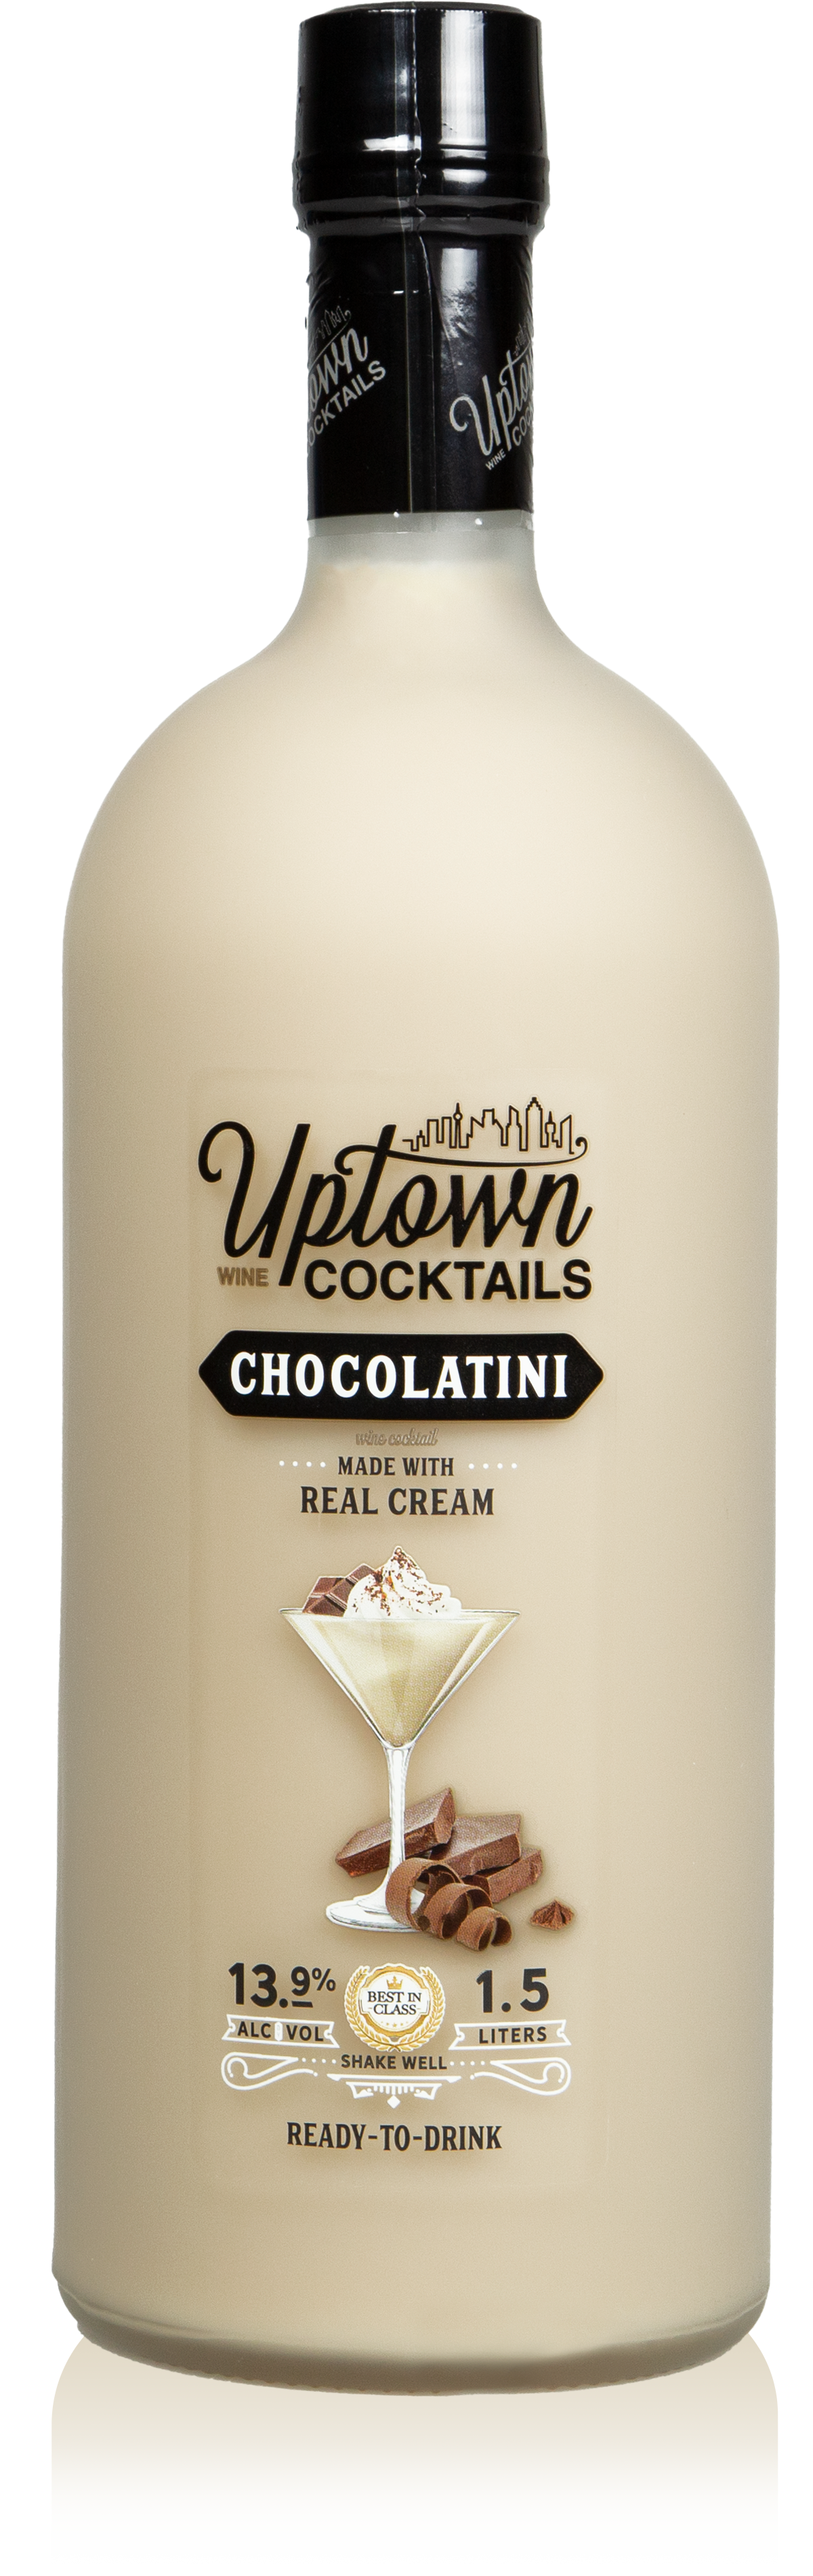 Product Image for Chocolatini